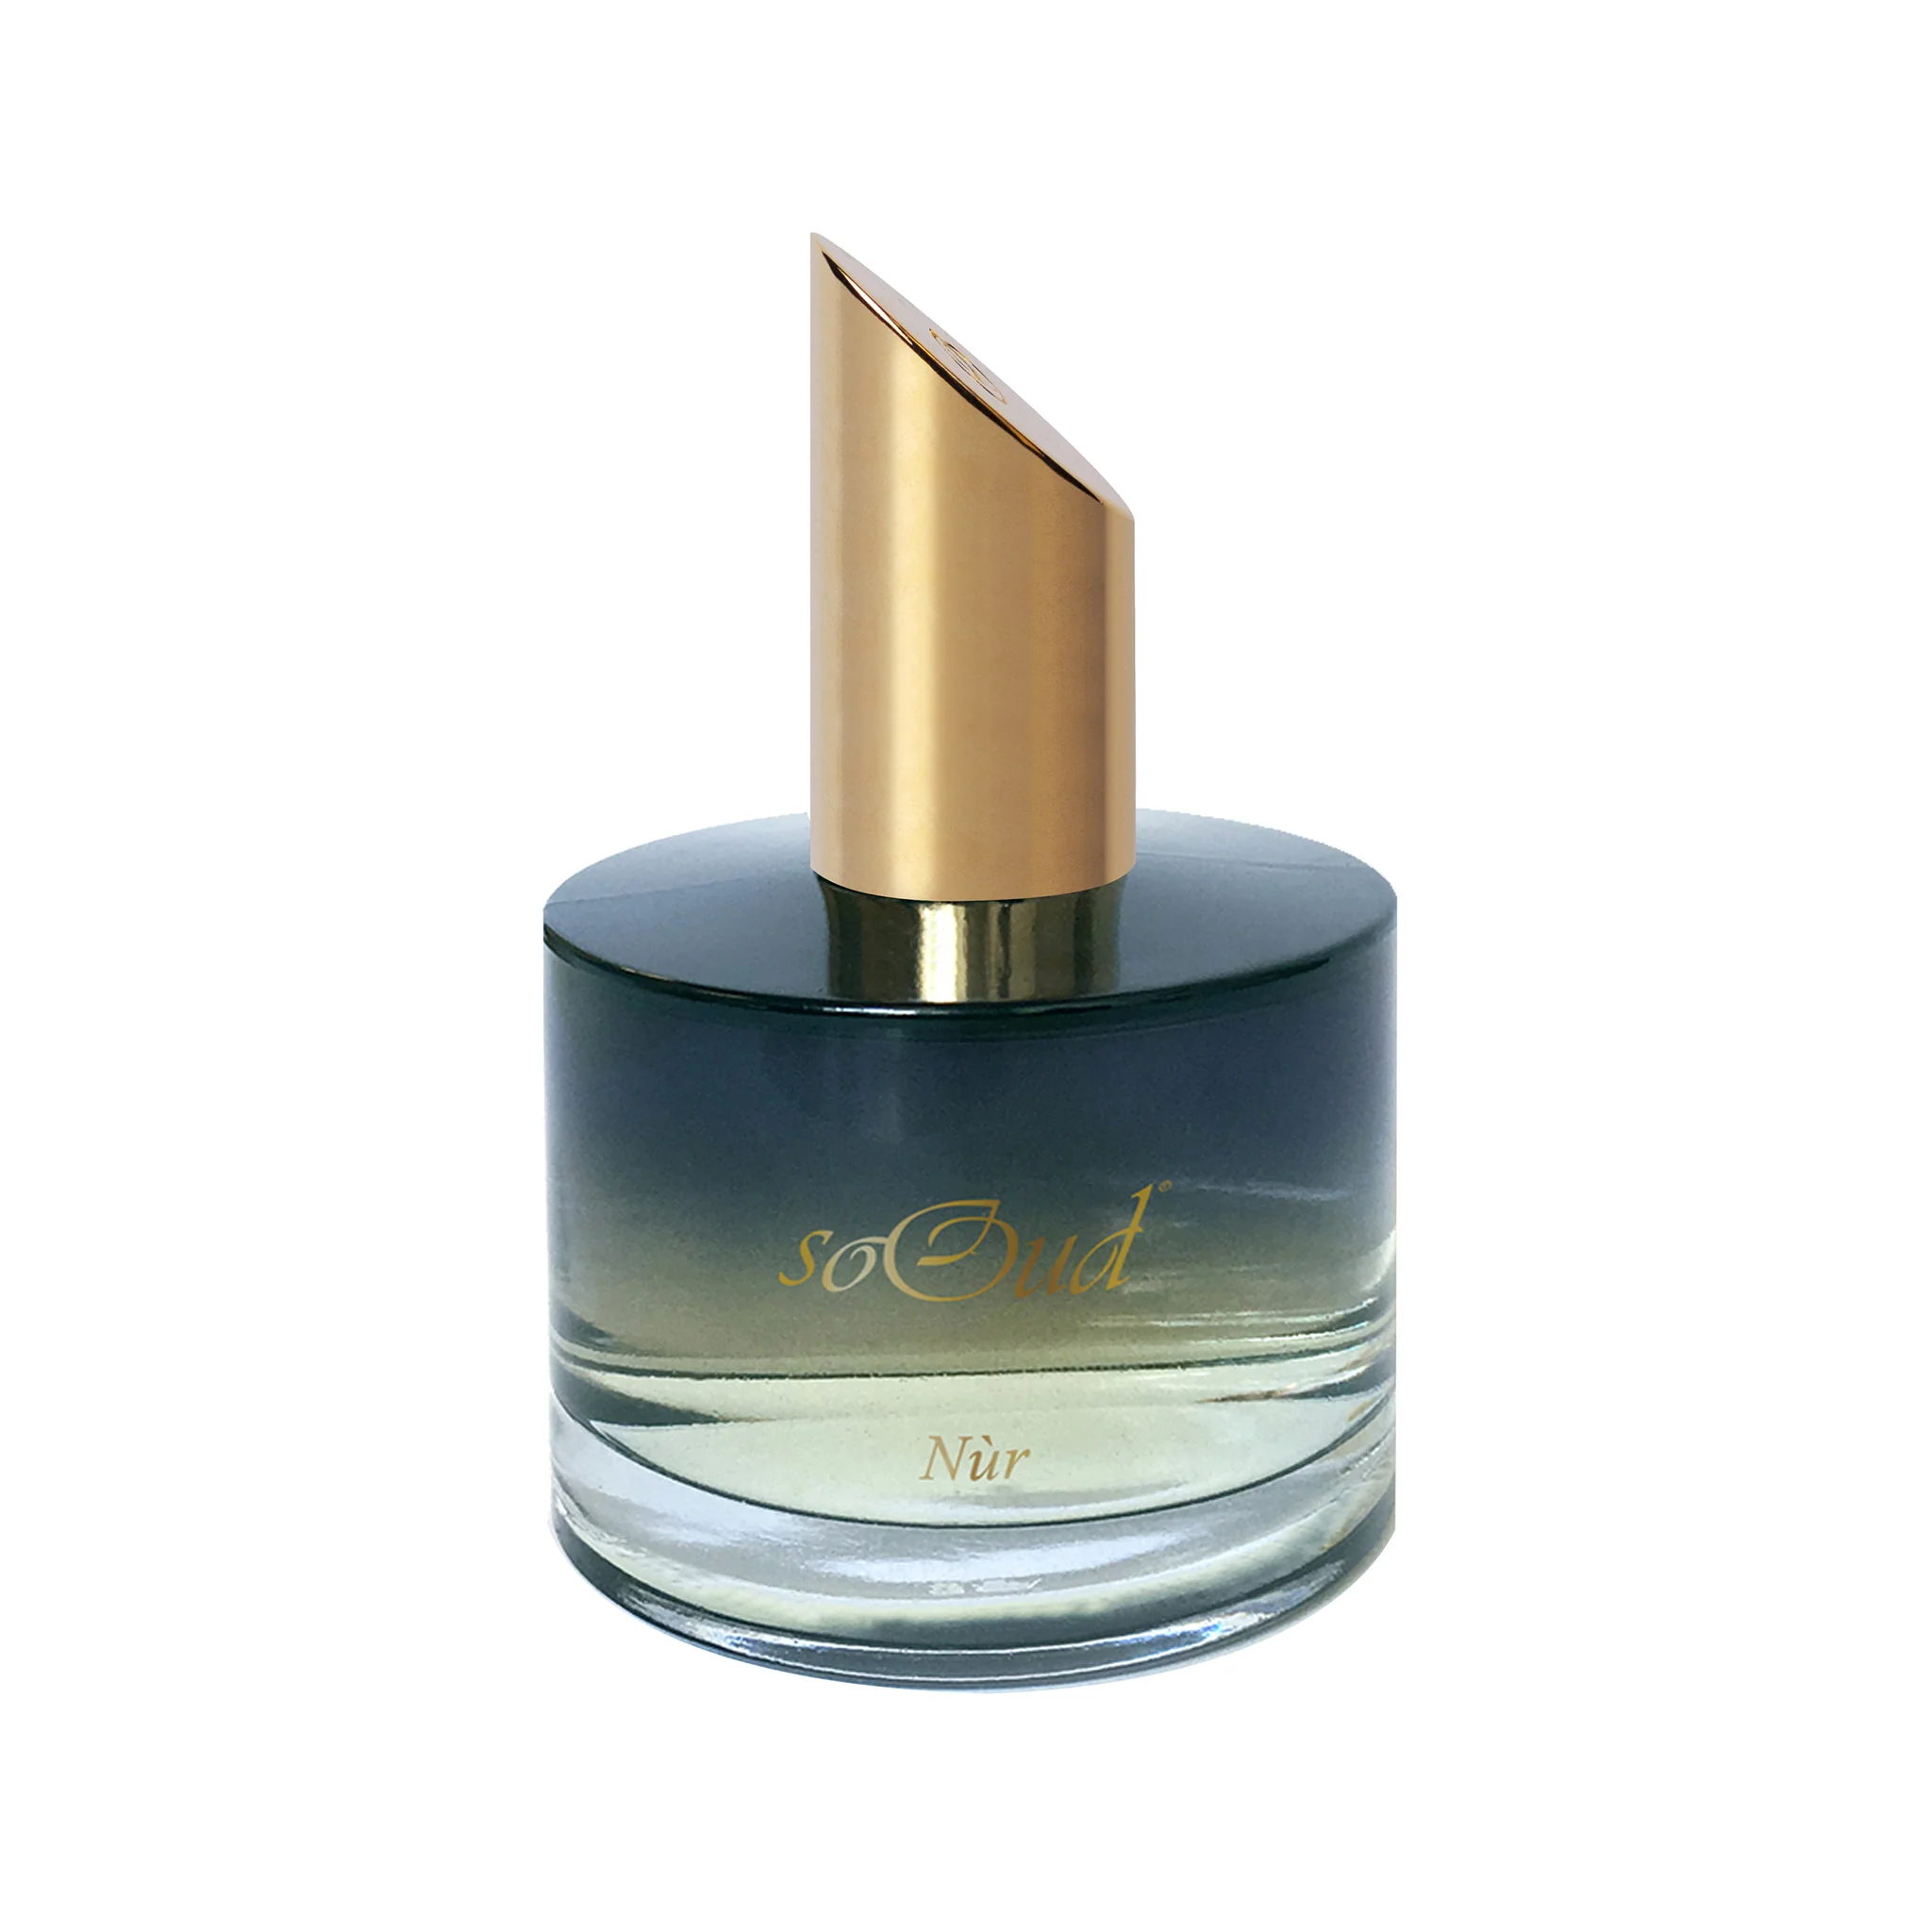 SOOUD_NUR_Eau_Fine_perfume_fragrance_luxury_niche_100ml_1024x1024@2x.webp